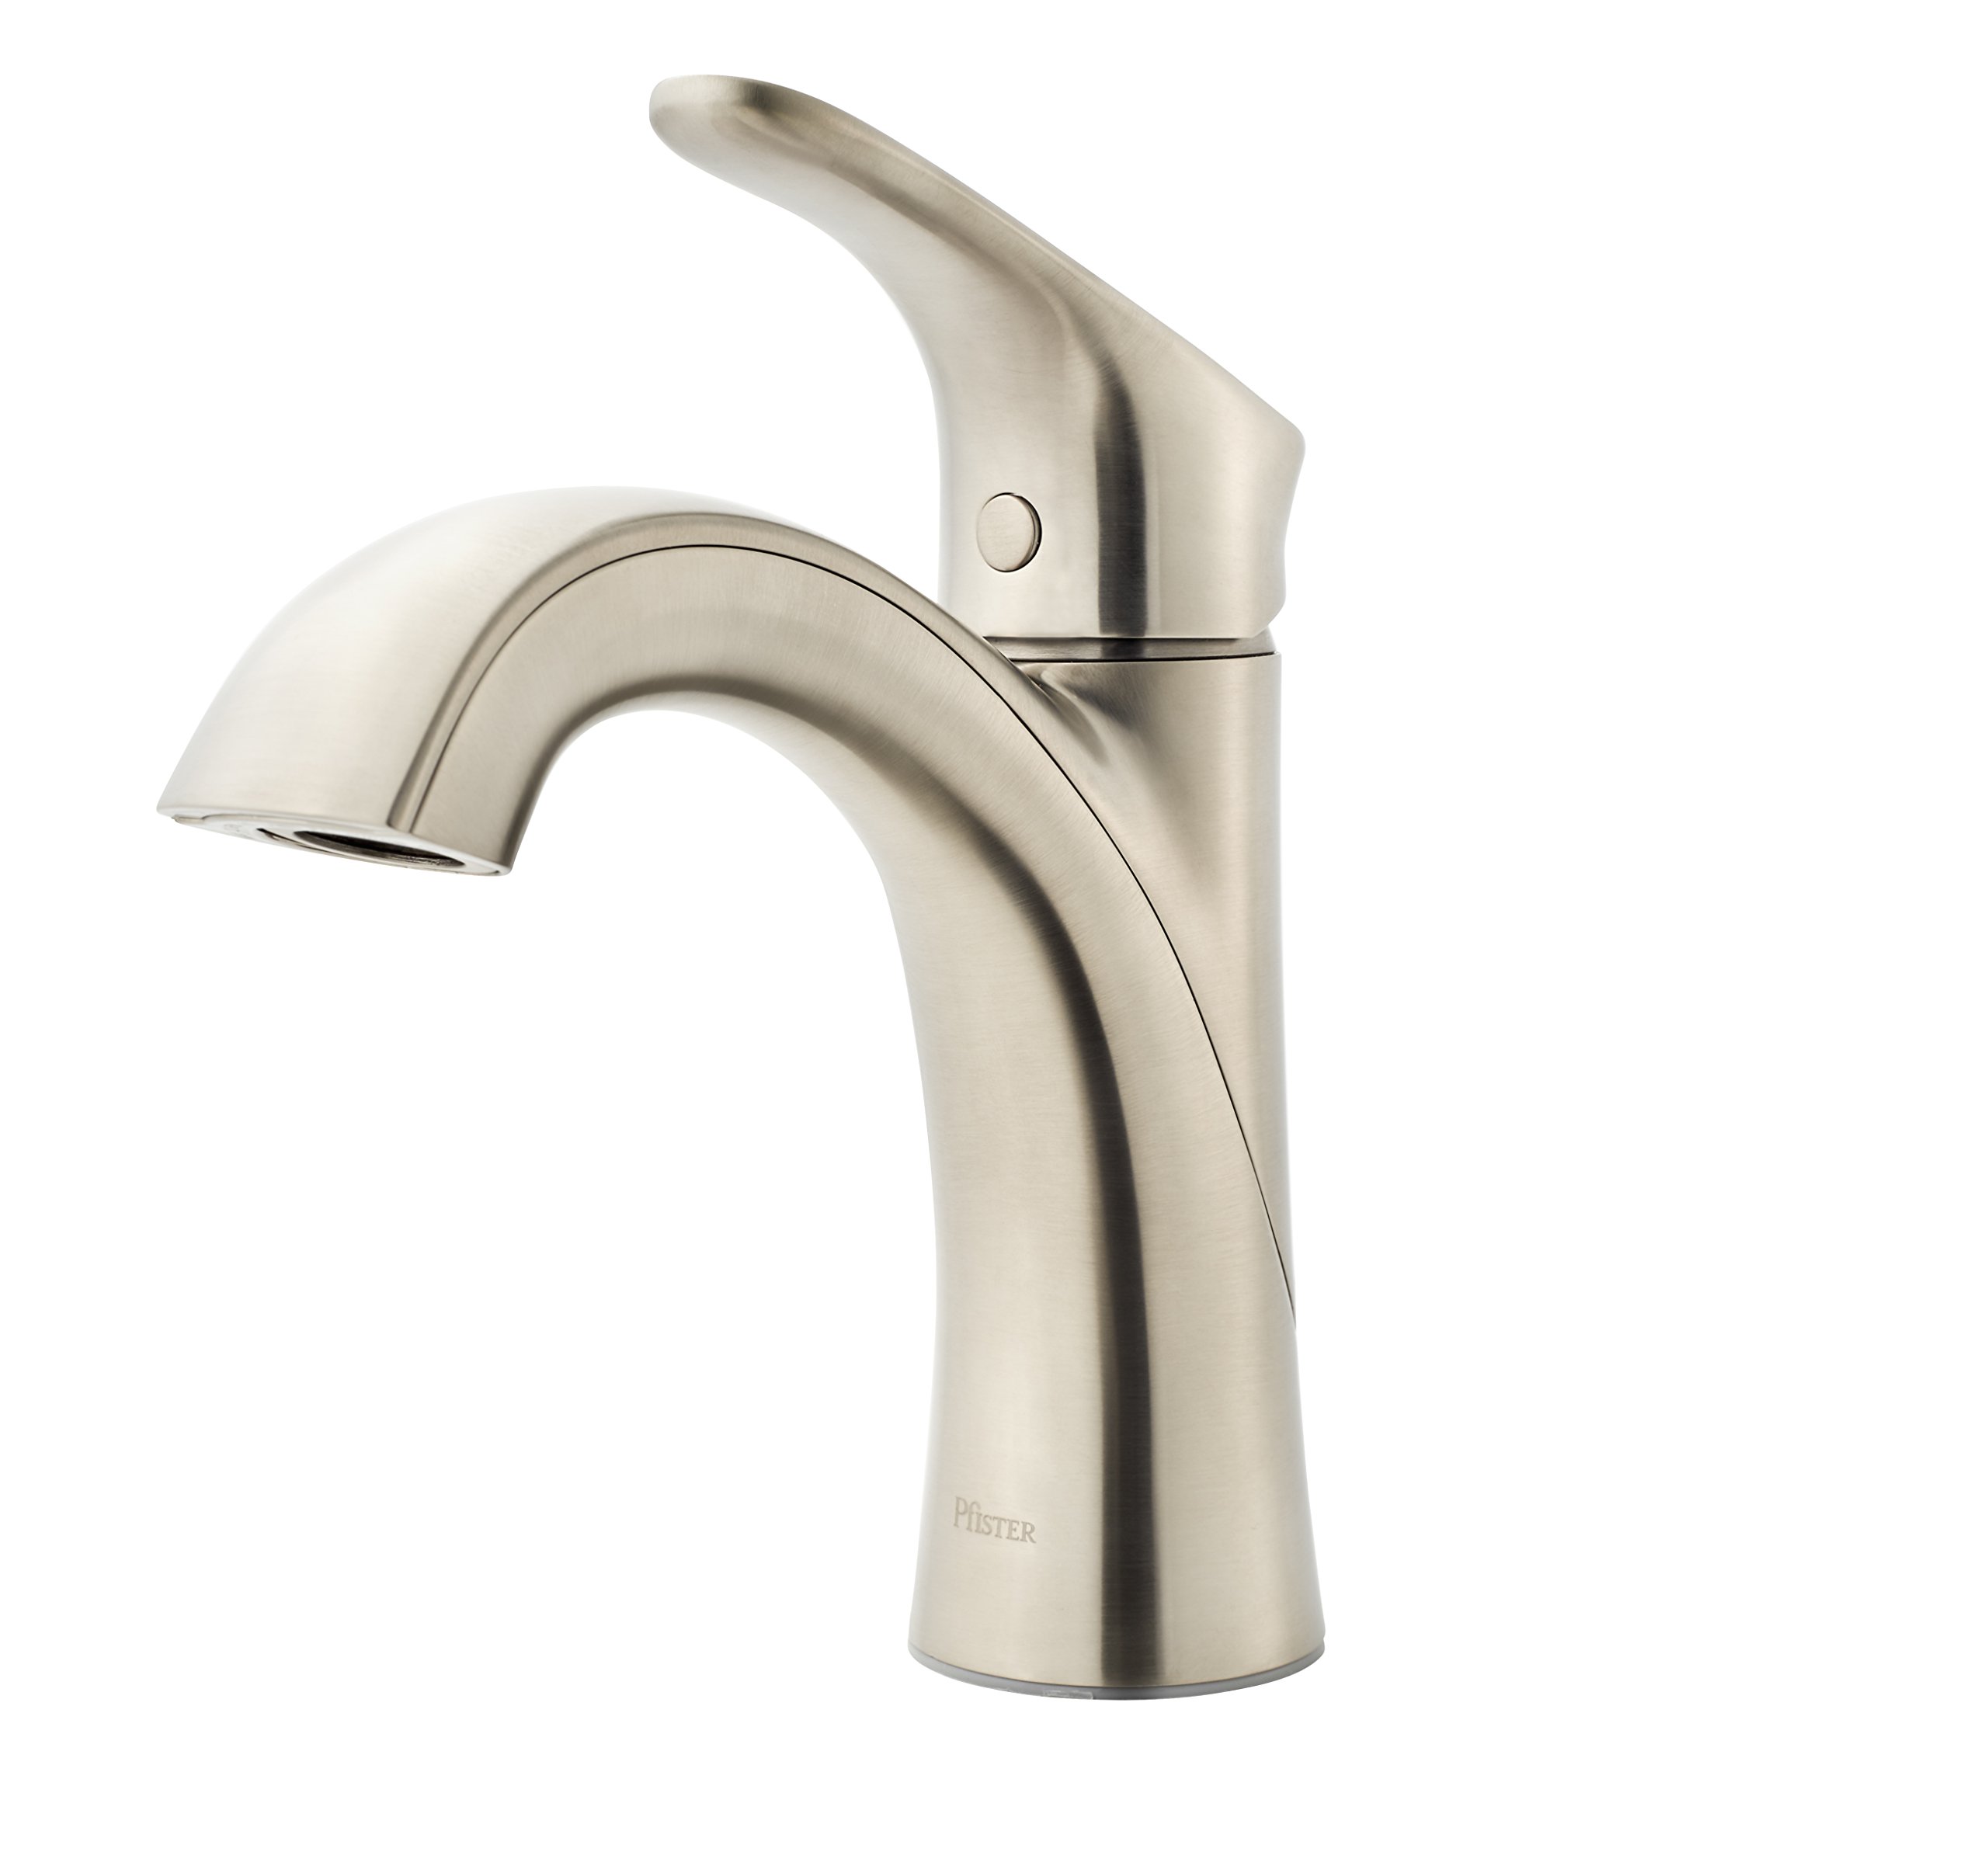 Pfister Weller Bathroom Sink Faucet, Single Handle, Single Hole or 3-Hole, Brushed Nickel Finish, LG42WR0K